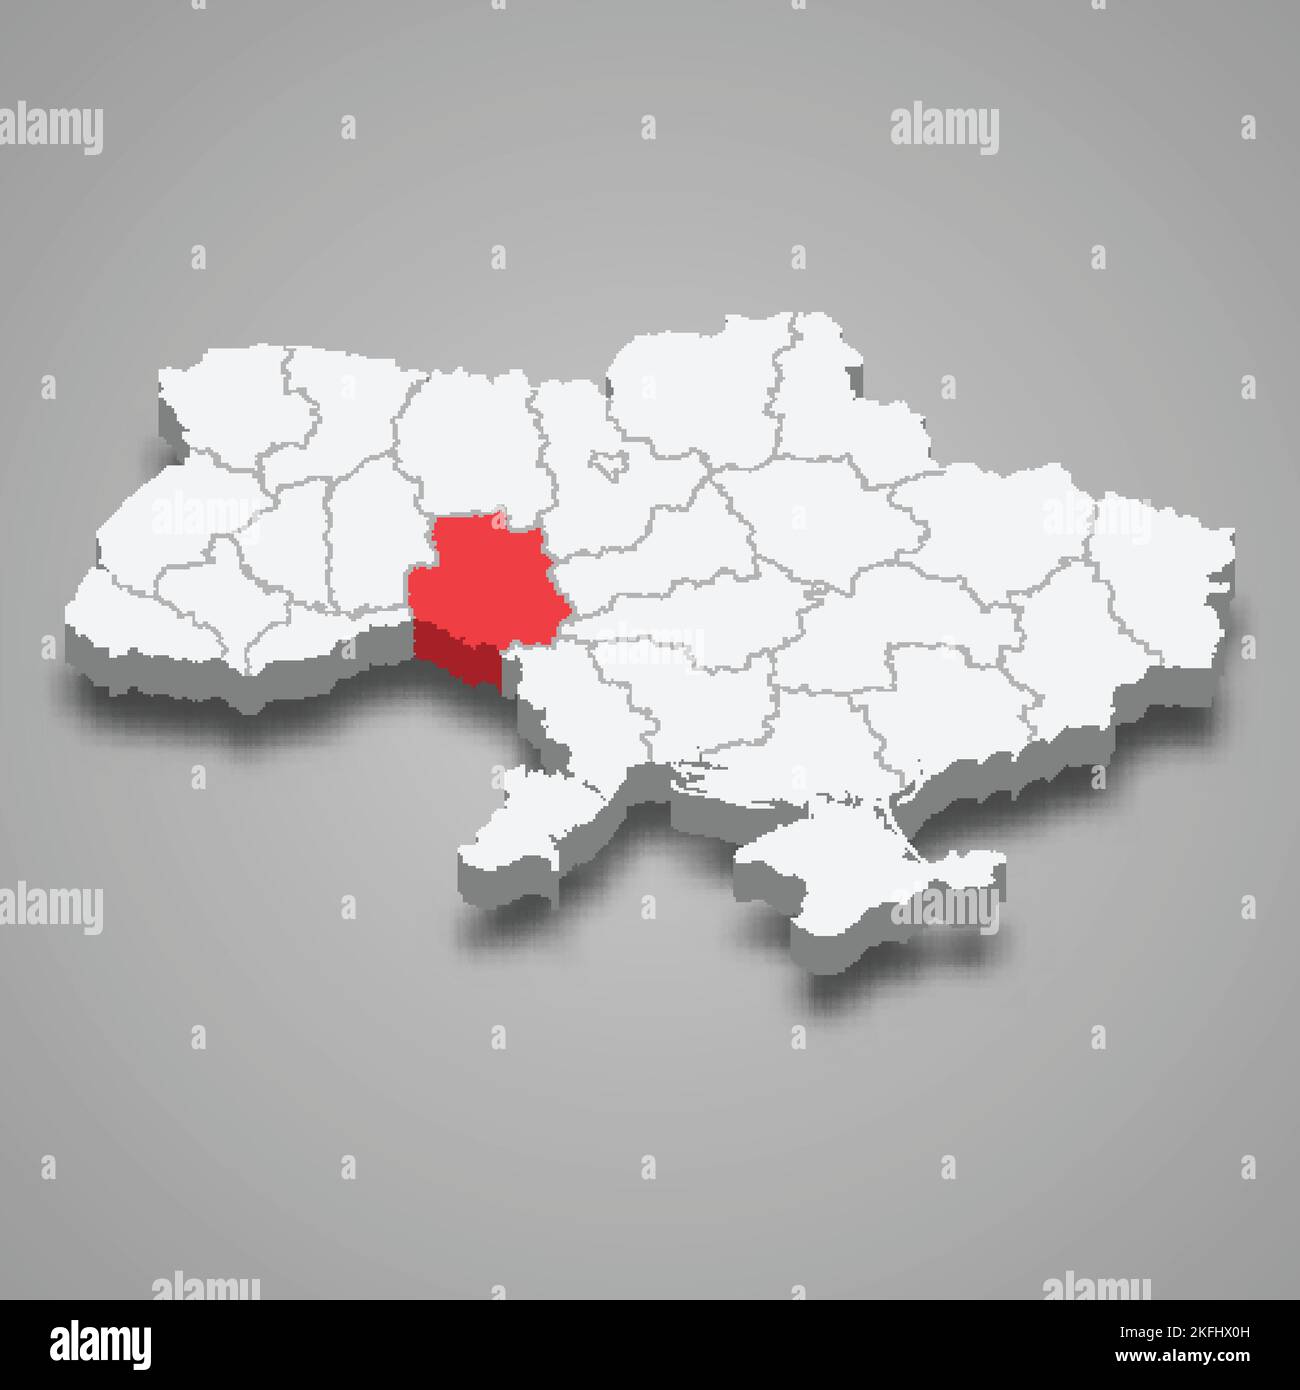 Vinnytsia Oblast. Region location within Ukraine 3d isometric map Stock Vector